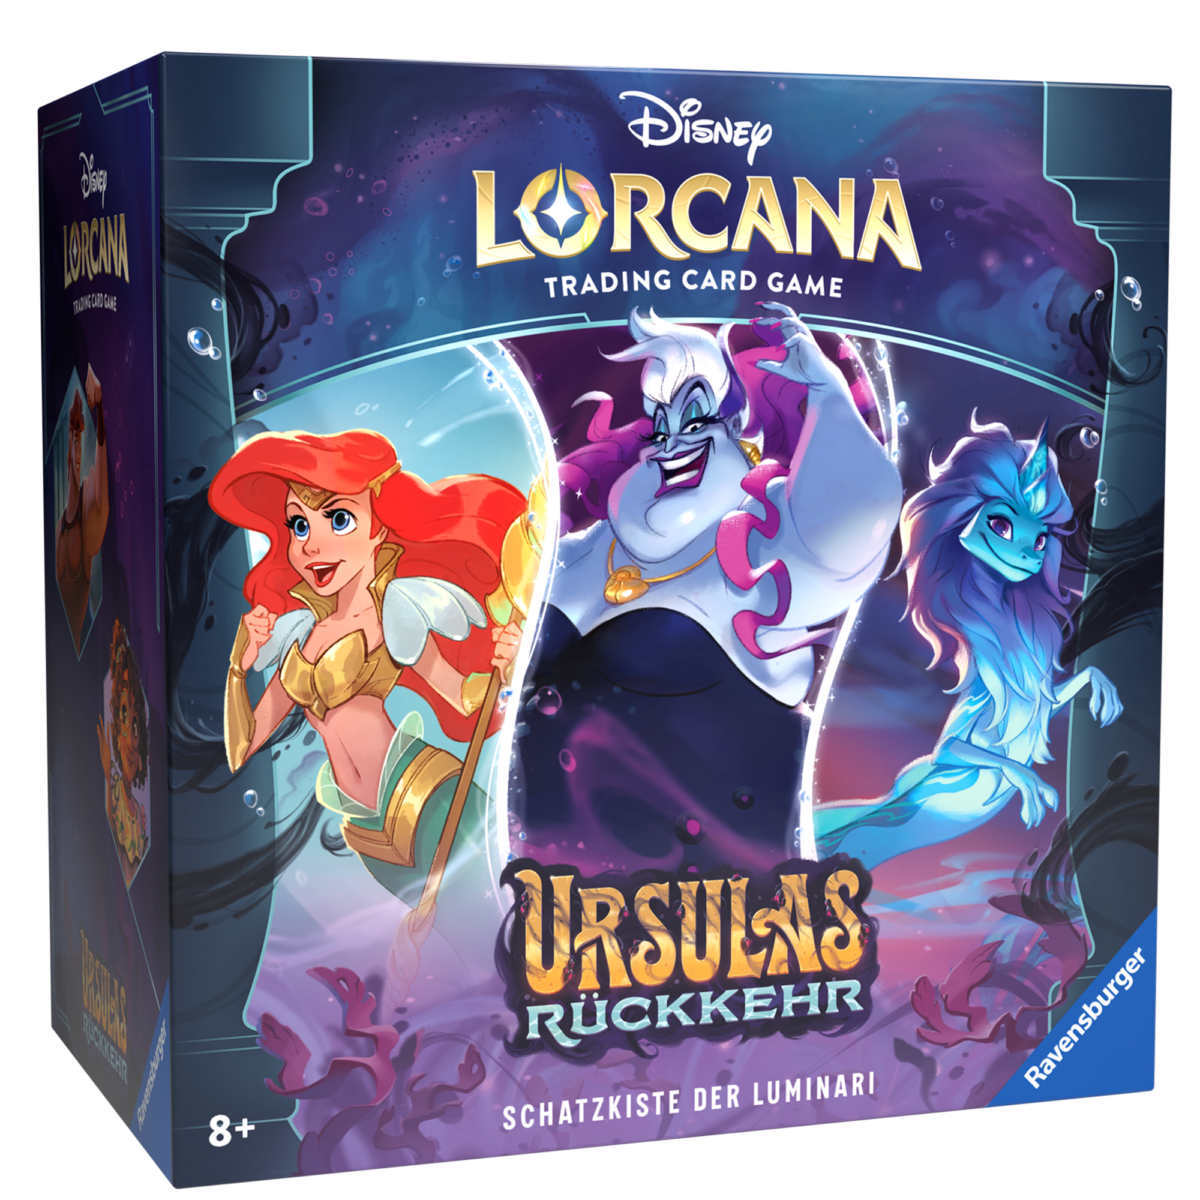 Disney Lorcana Trading Card Game: Kapitel 4 - Ursulas Rückkehr: Schatzkiste der Luminari